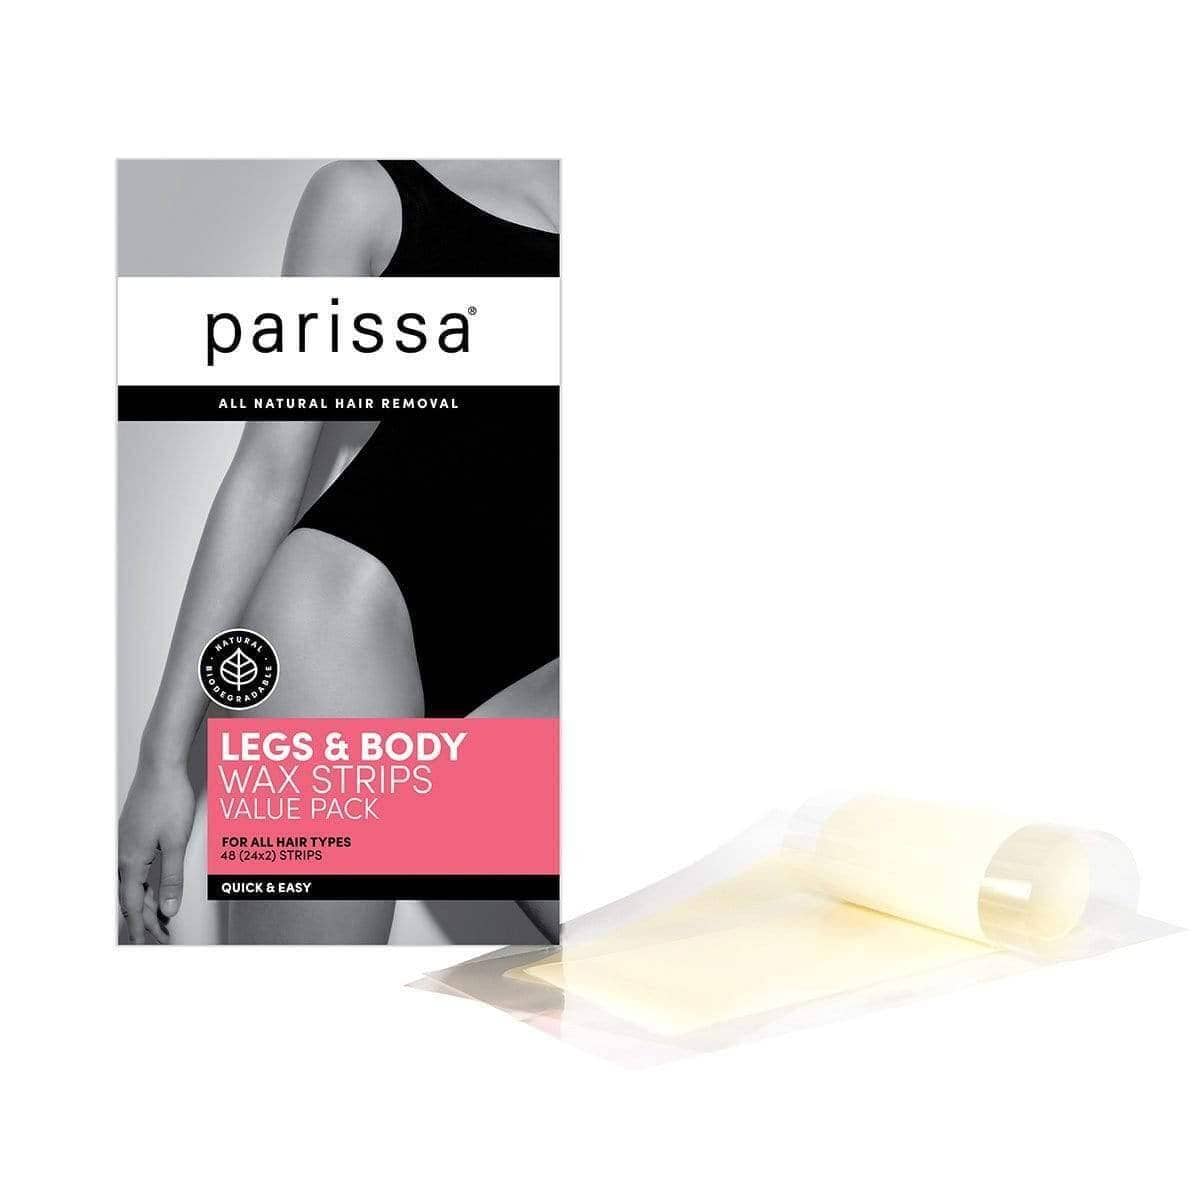 Legs & Body Wax Strips (Value Pack)